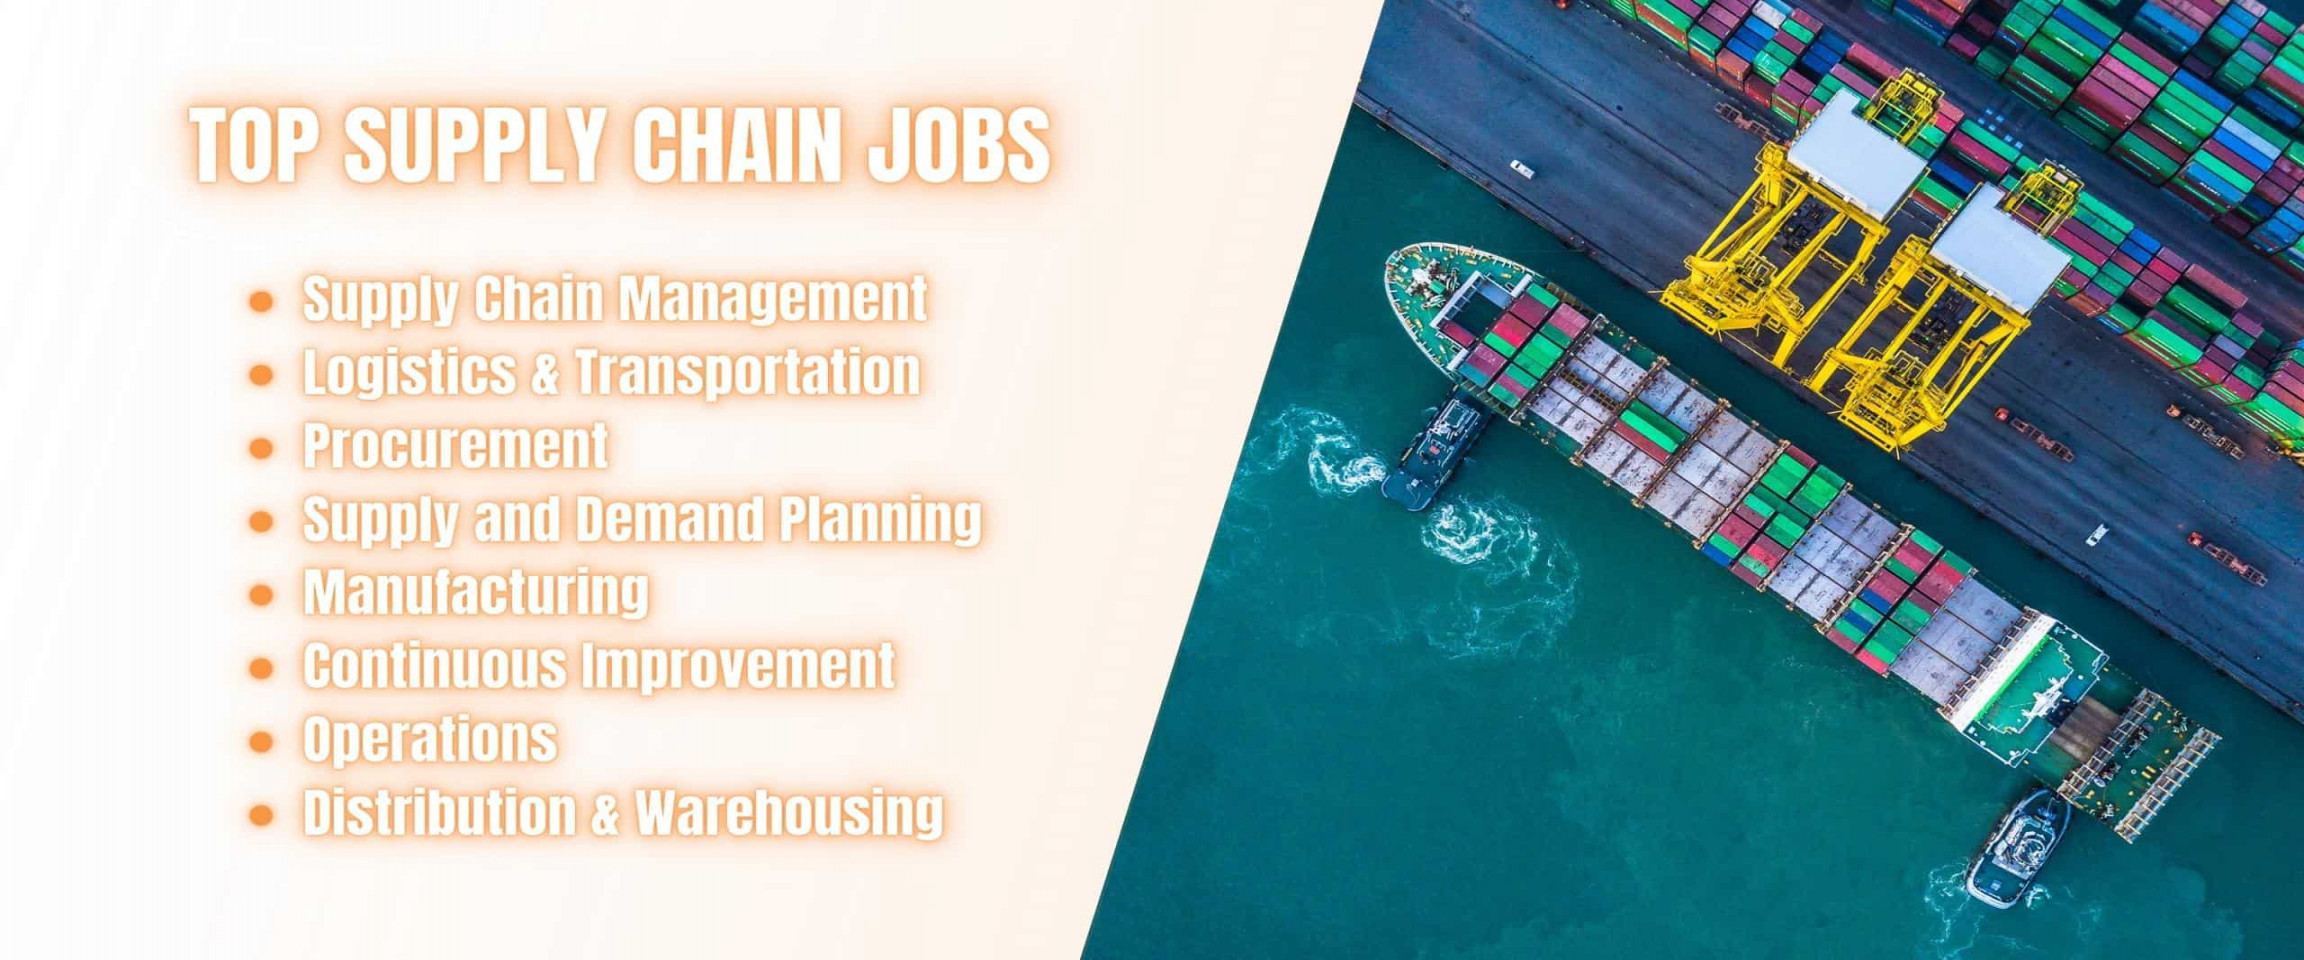 Top Supply Chain Management Jobs  Salaries and Job Descriptions